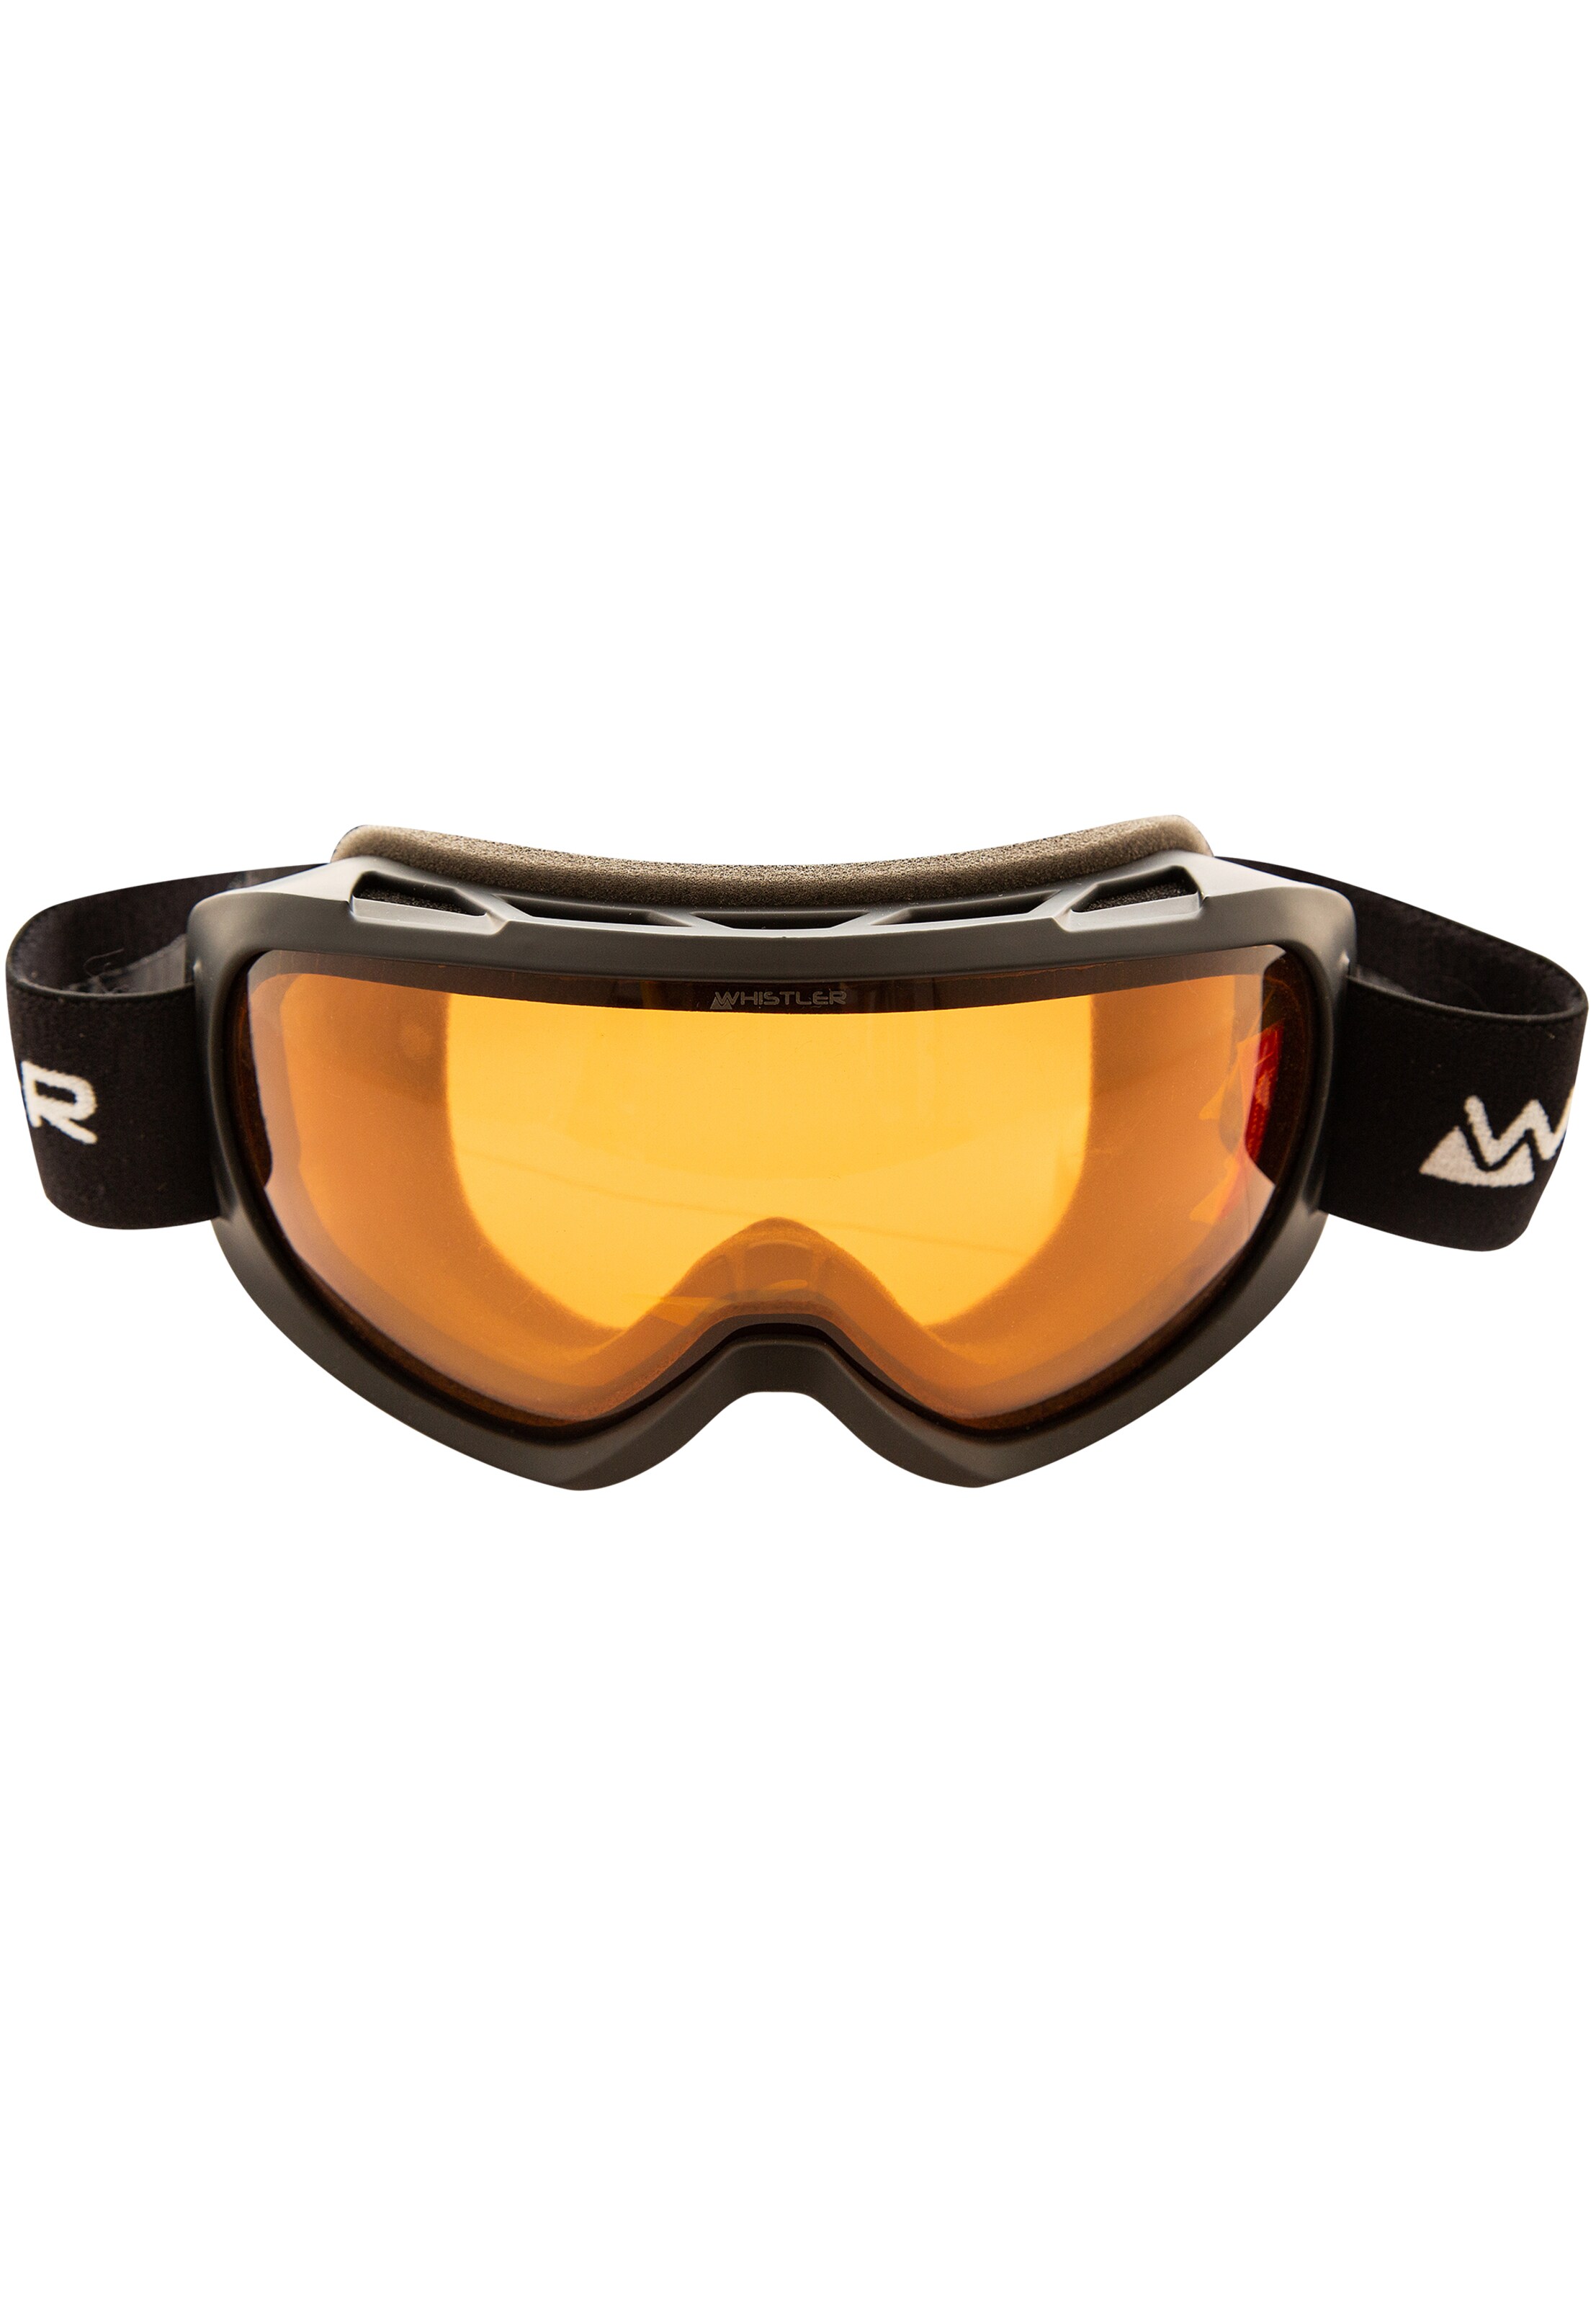 Whistler Skibrille WS3.54 Clear Vision in Orange 